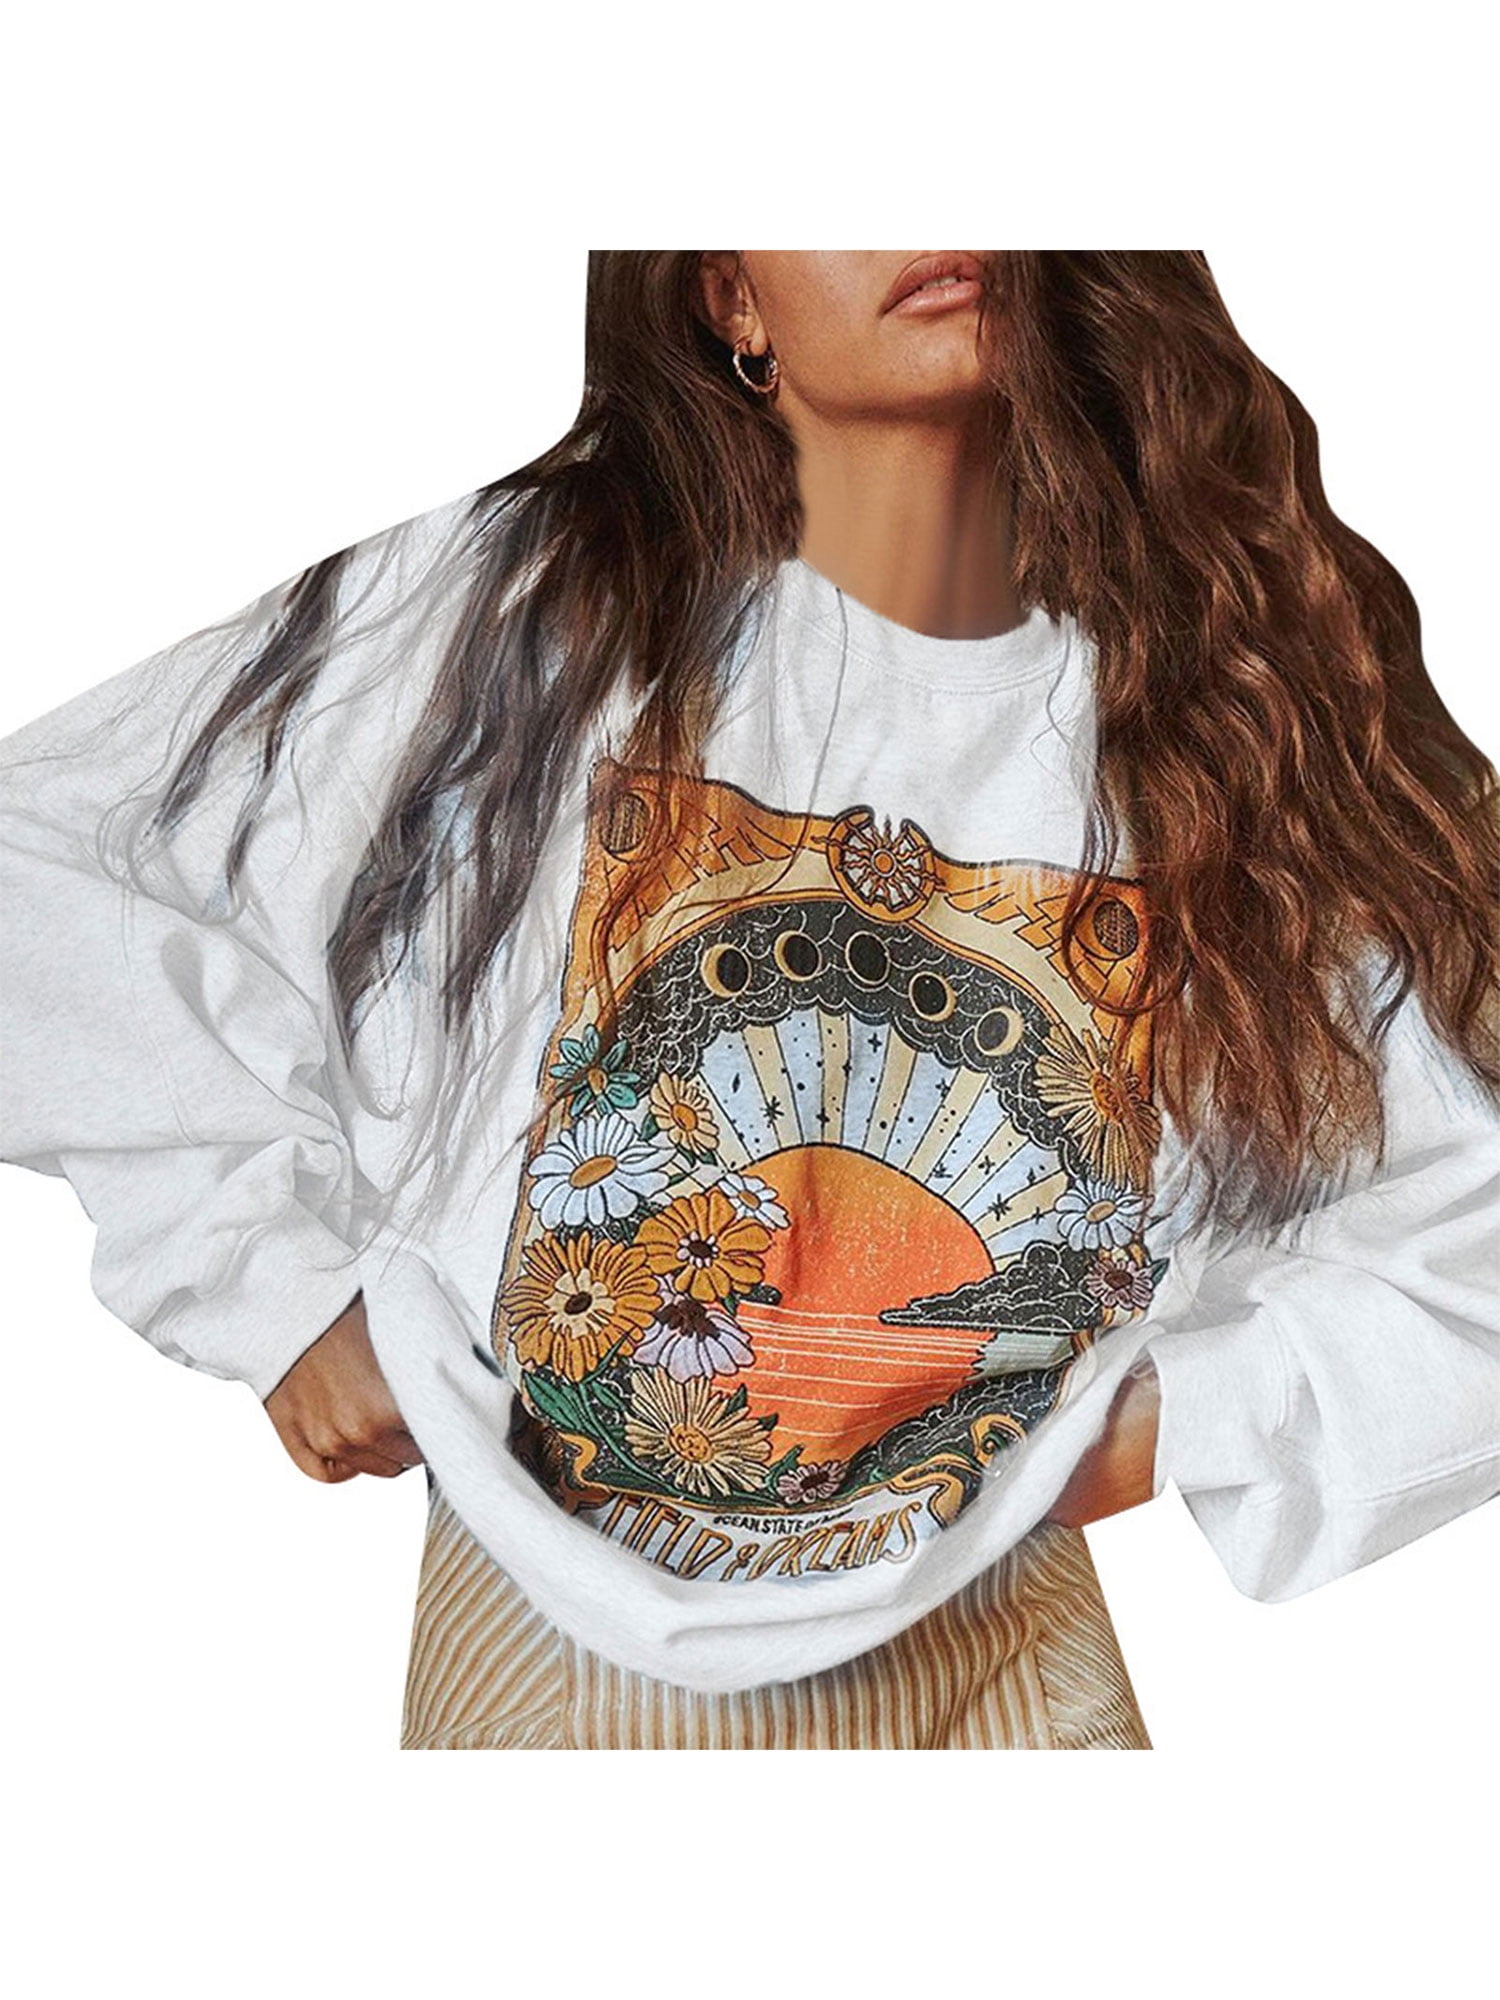 Oversized Sweatshirts for Women Vintage Moon Sun Graphics Print Pullover Long Sleeve Crewnevk Blouse 